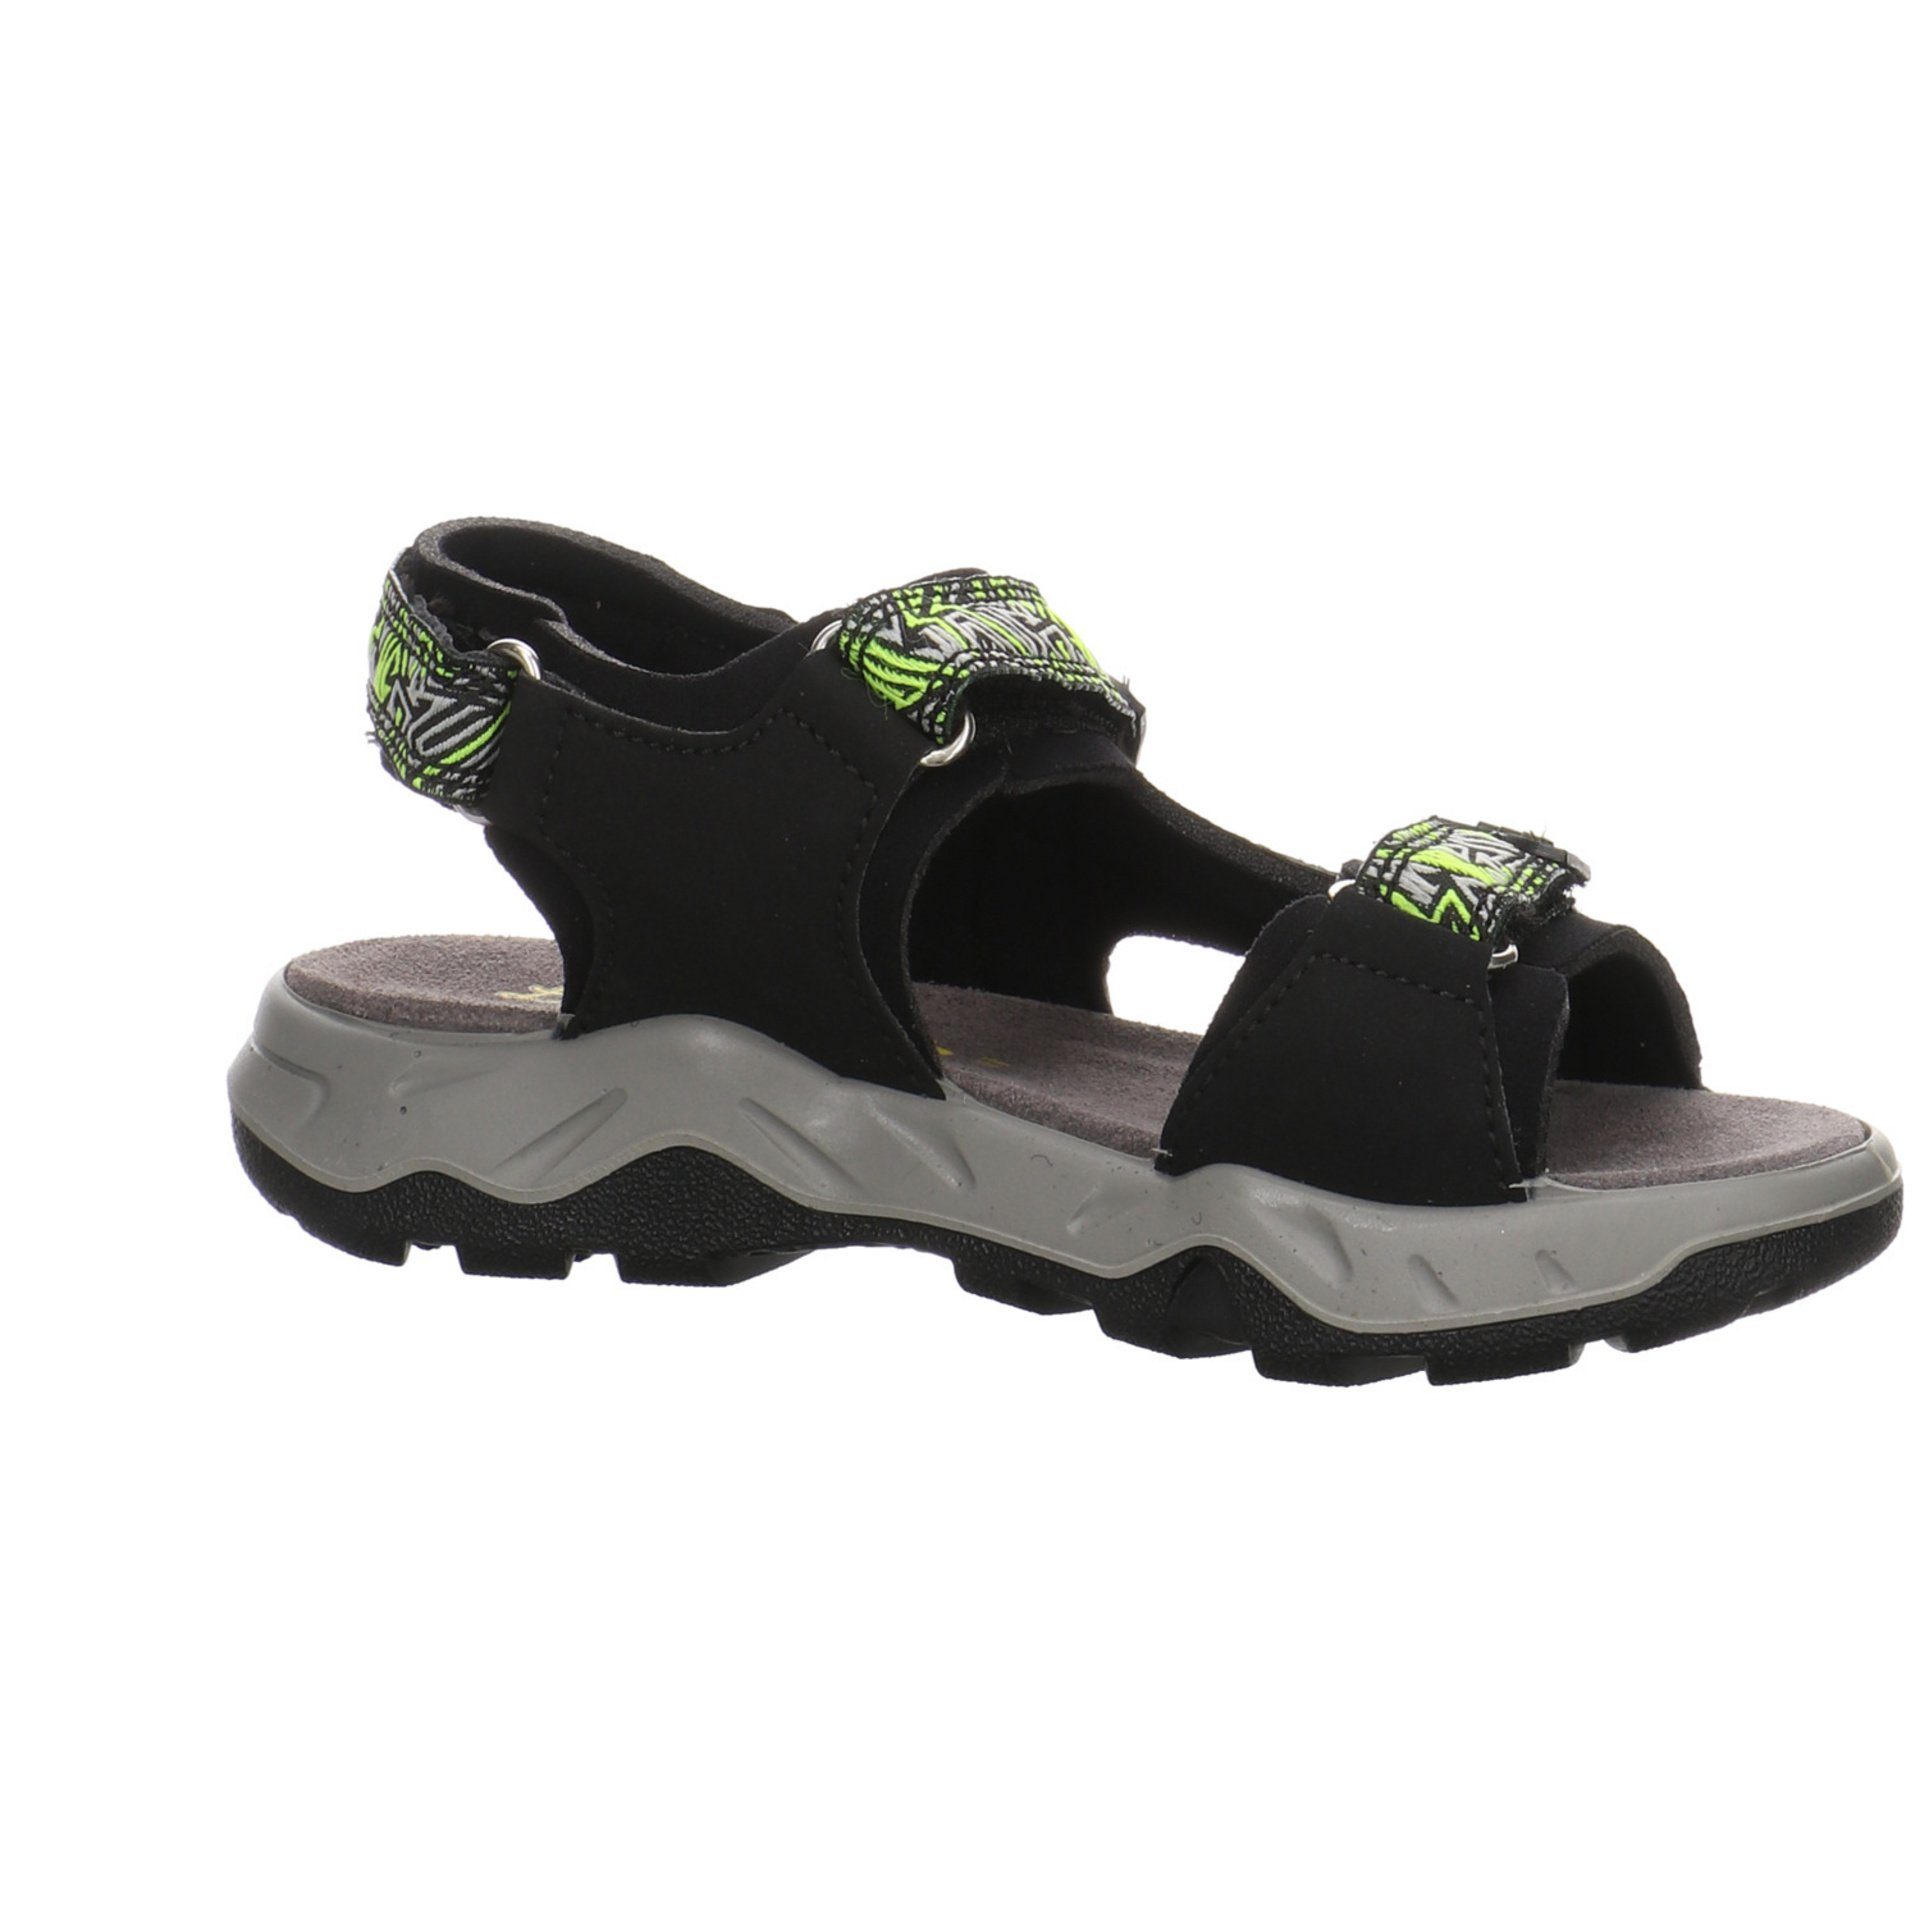 Lurchi Odono Multi Schuhe Sandale Salamander Sandale Sandalen Jungen Black Kinderschuhe Synthetikkombination